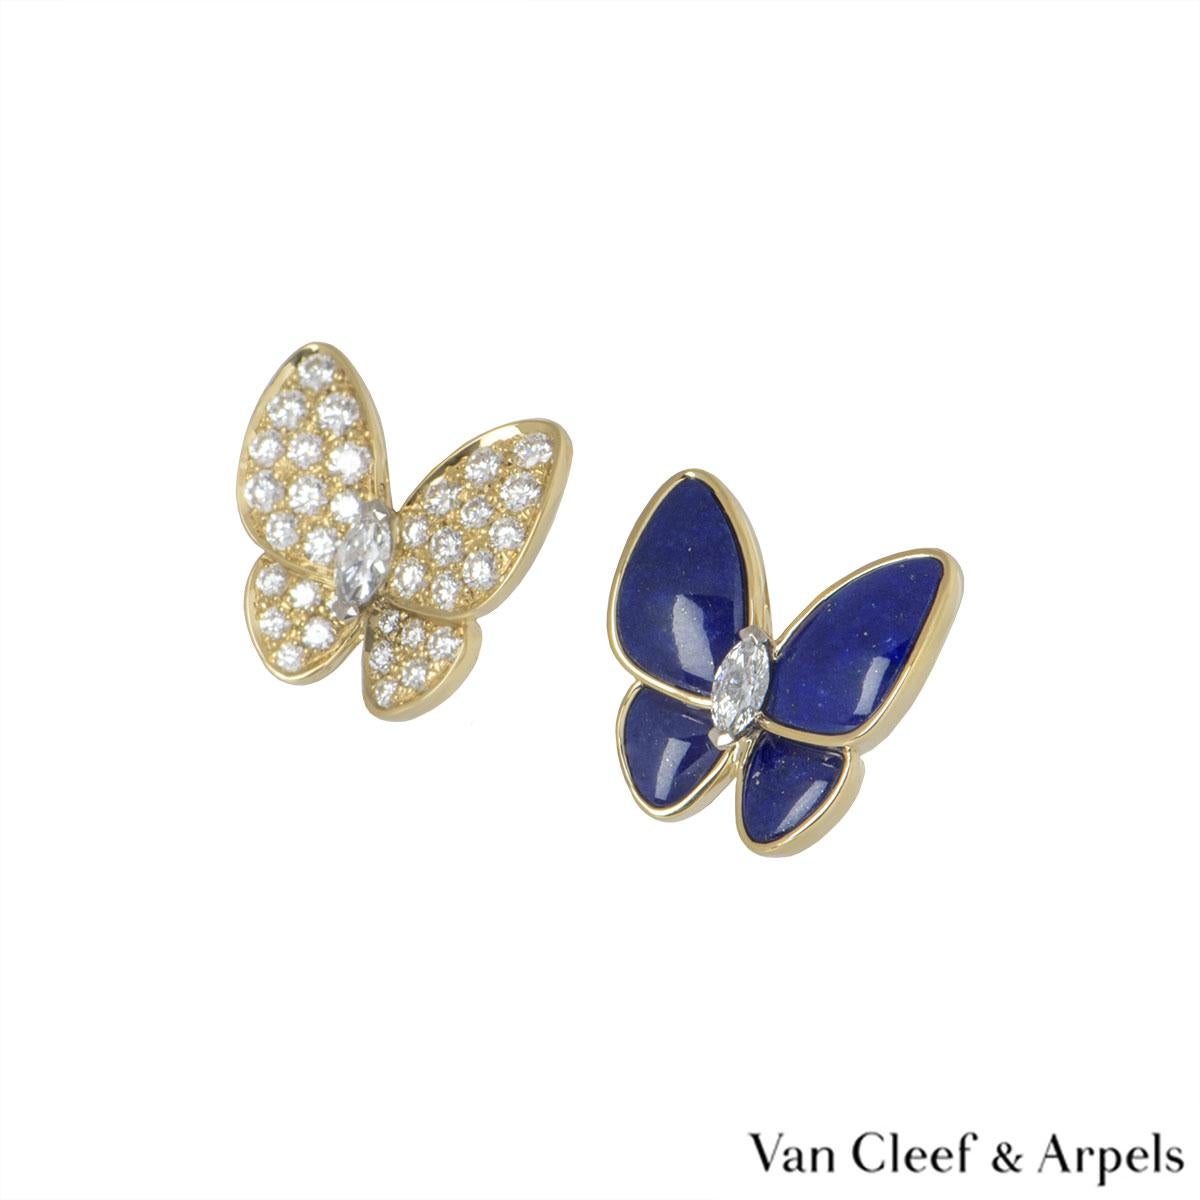 van cleef butterfly earrings